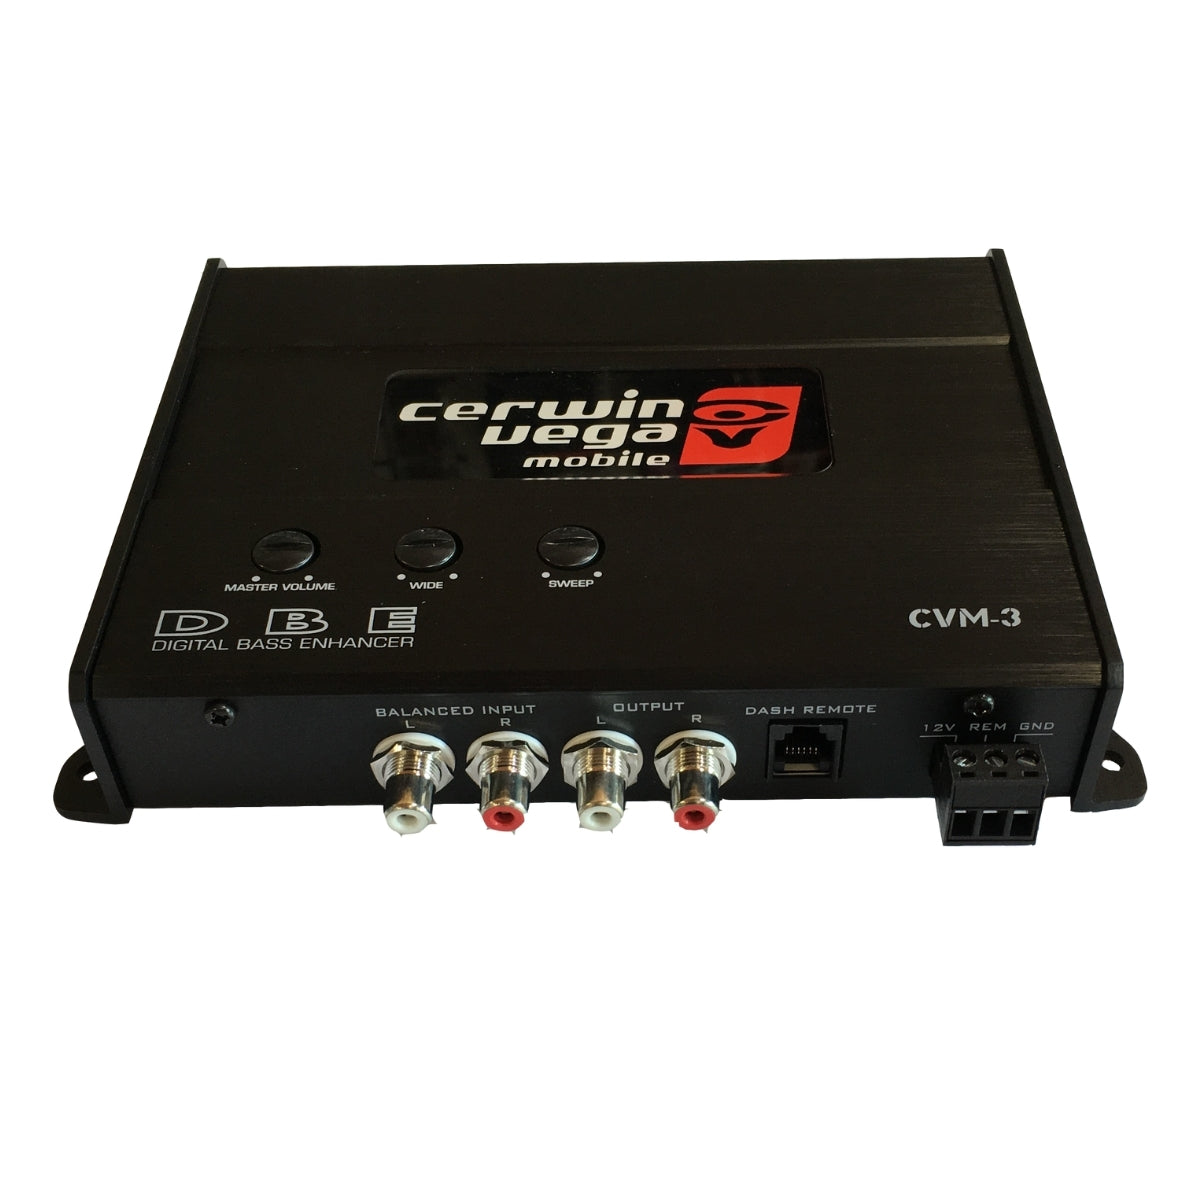 Cerwin Vega Bass Maximizer Processor Amplifier